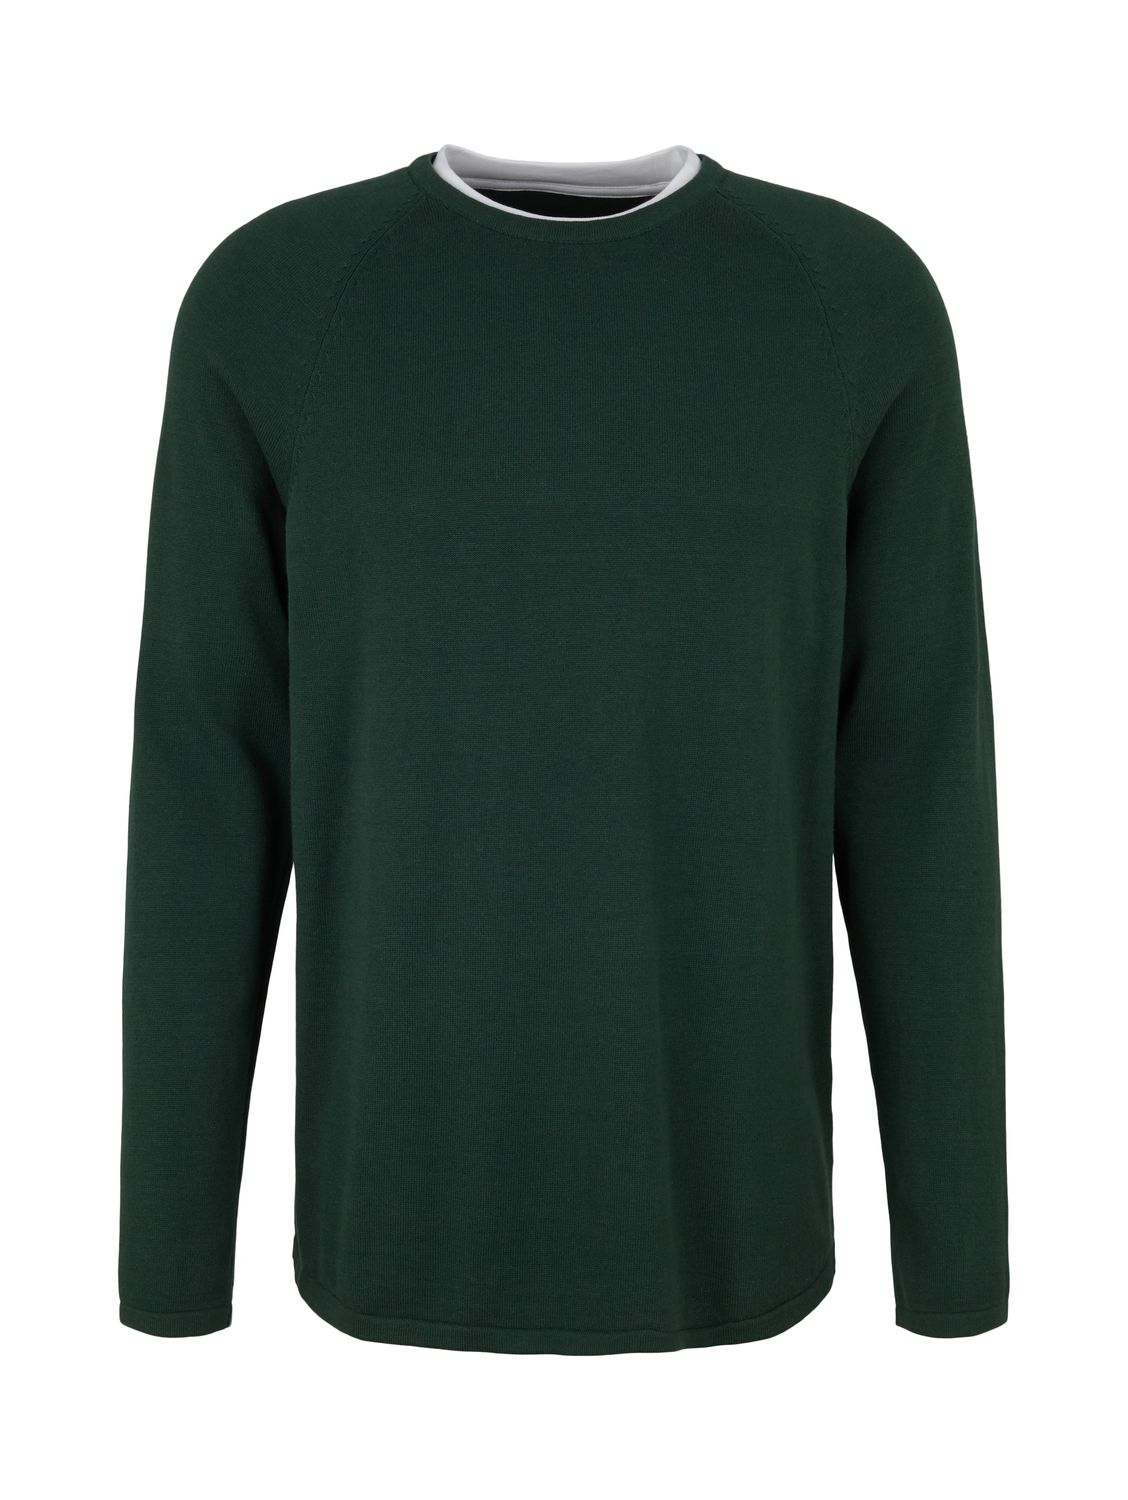 Пуловер TOM TAILOR Denim BASIC, зеленый